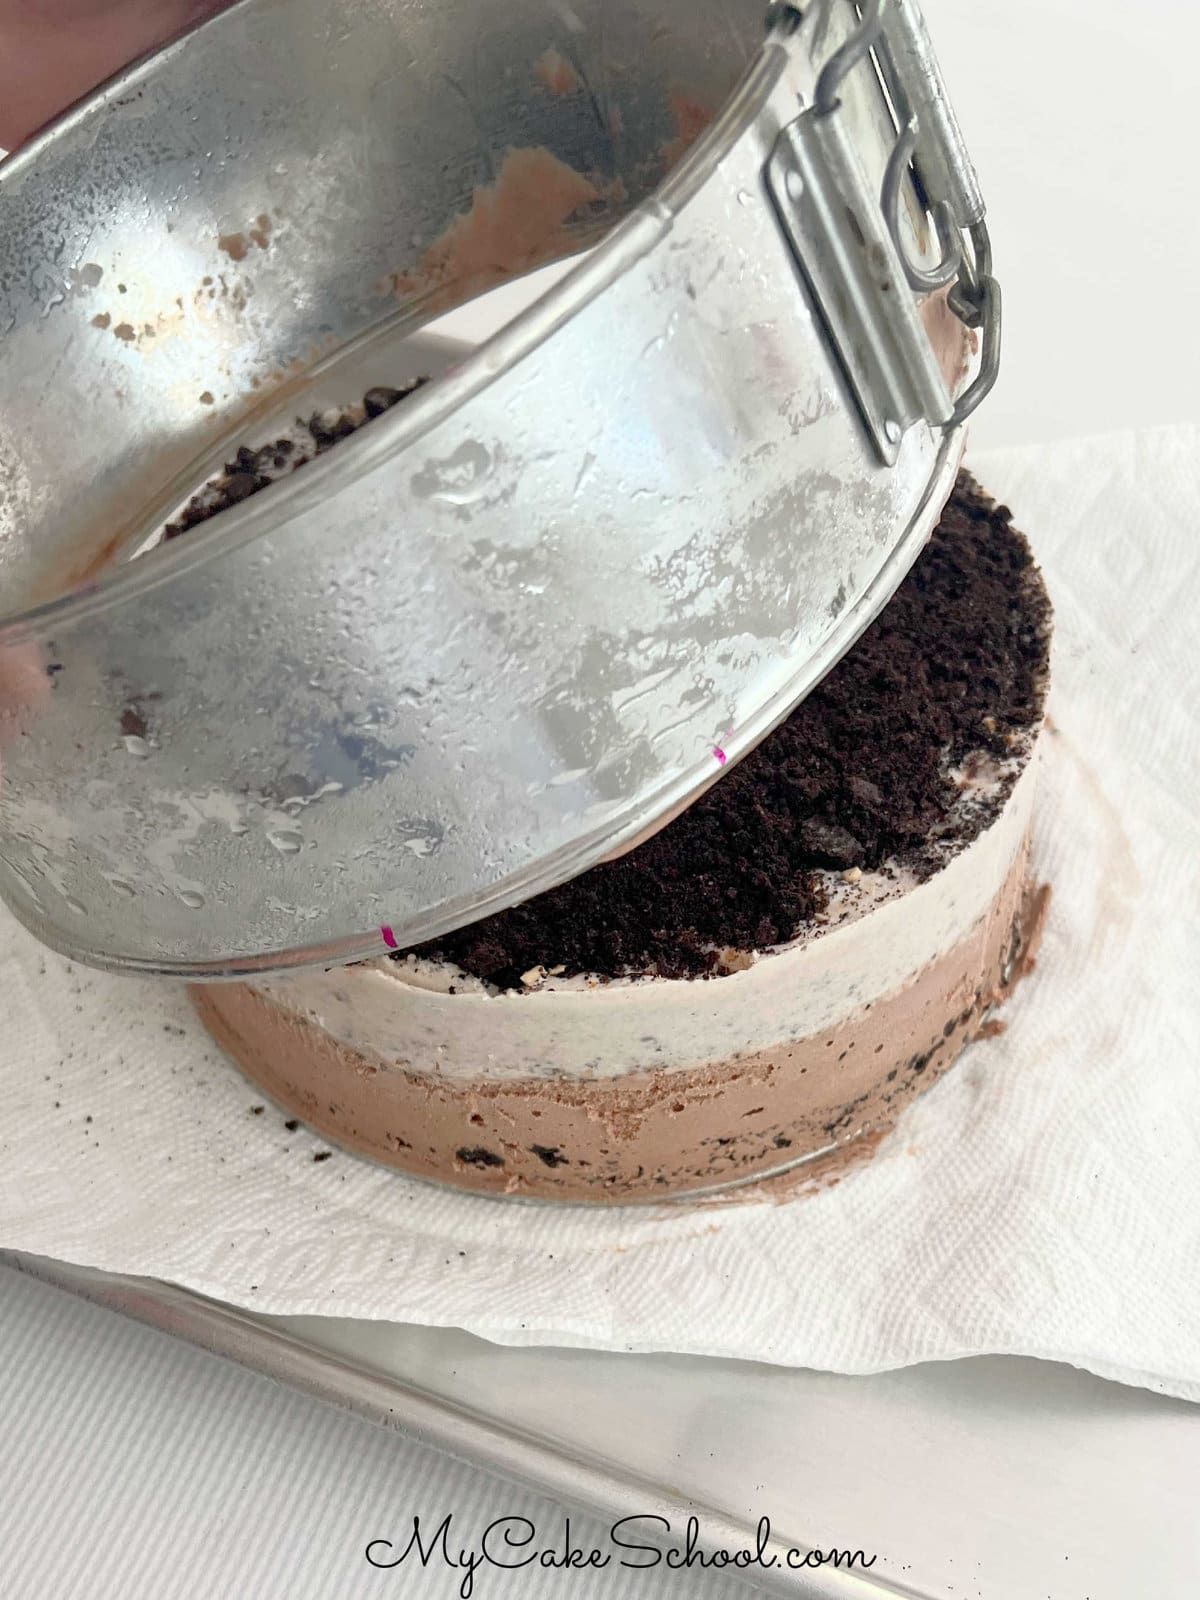 Removing the springform pan to reveal ice cream cake